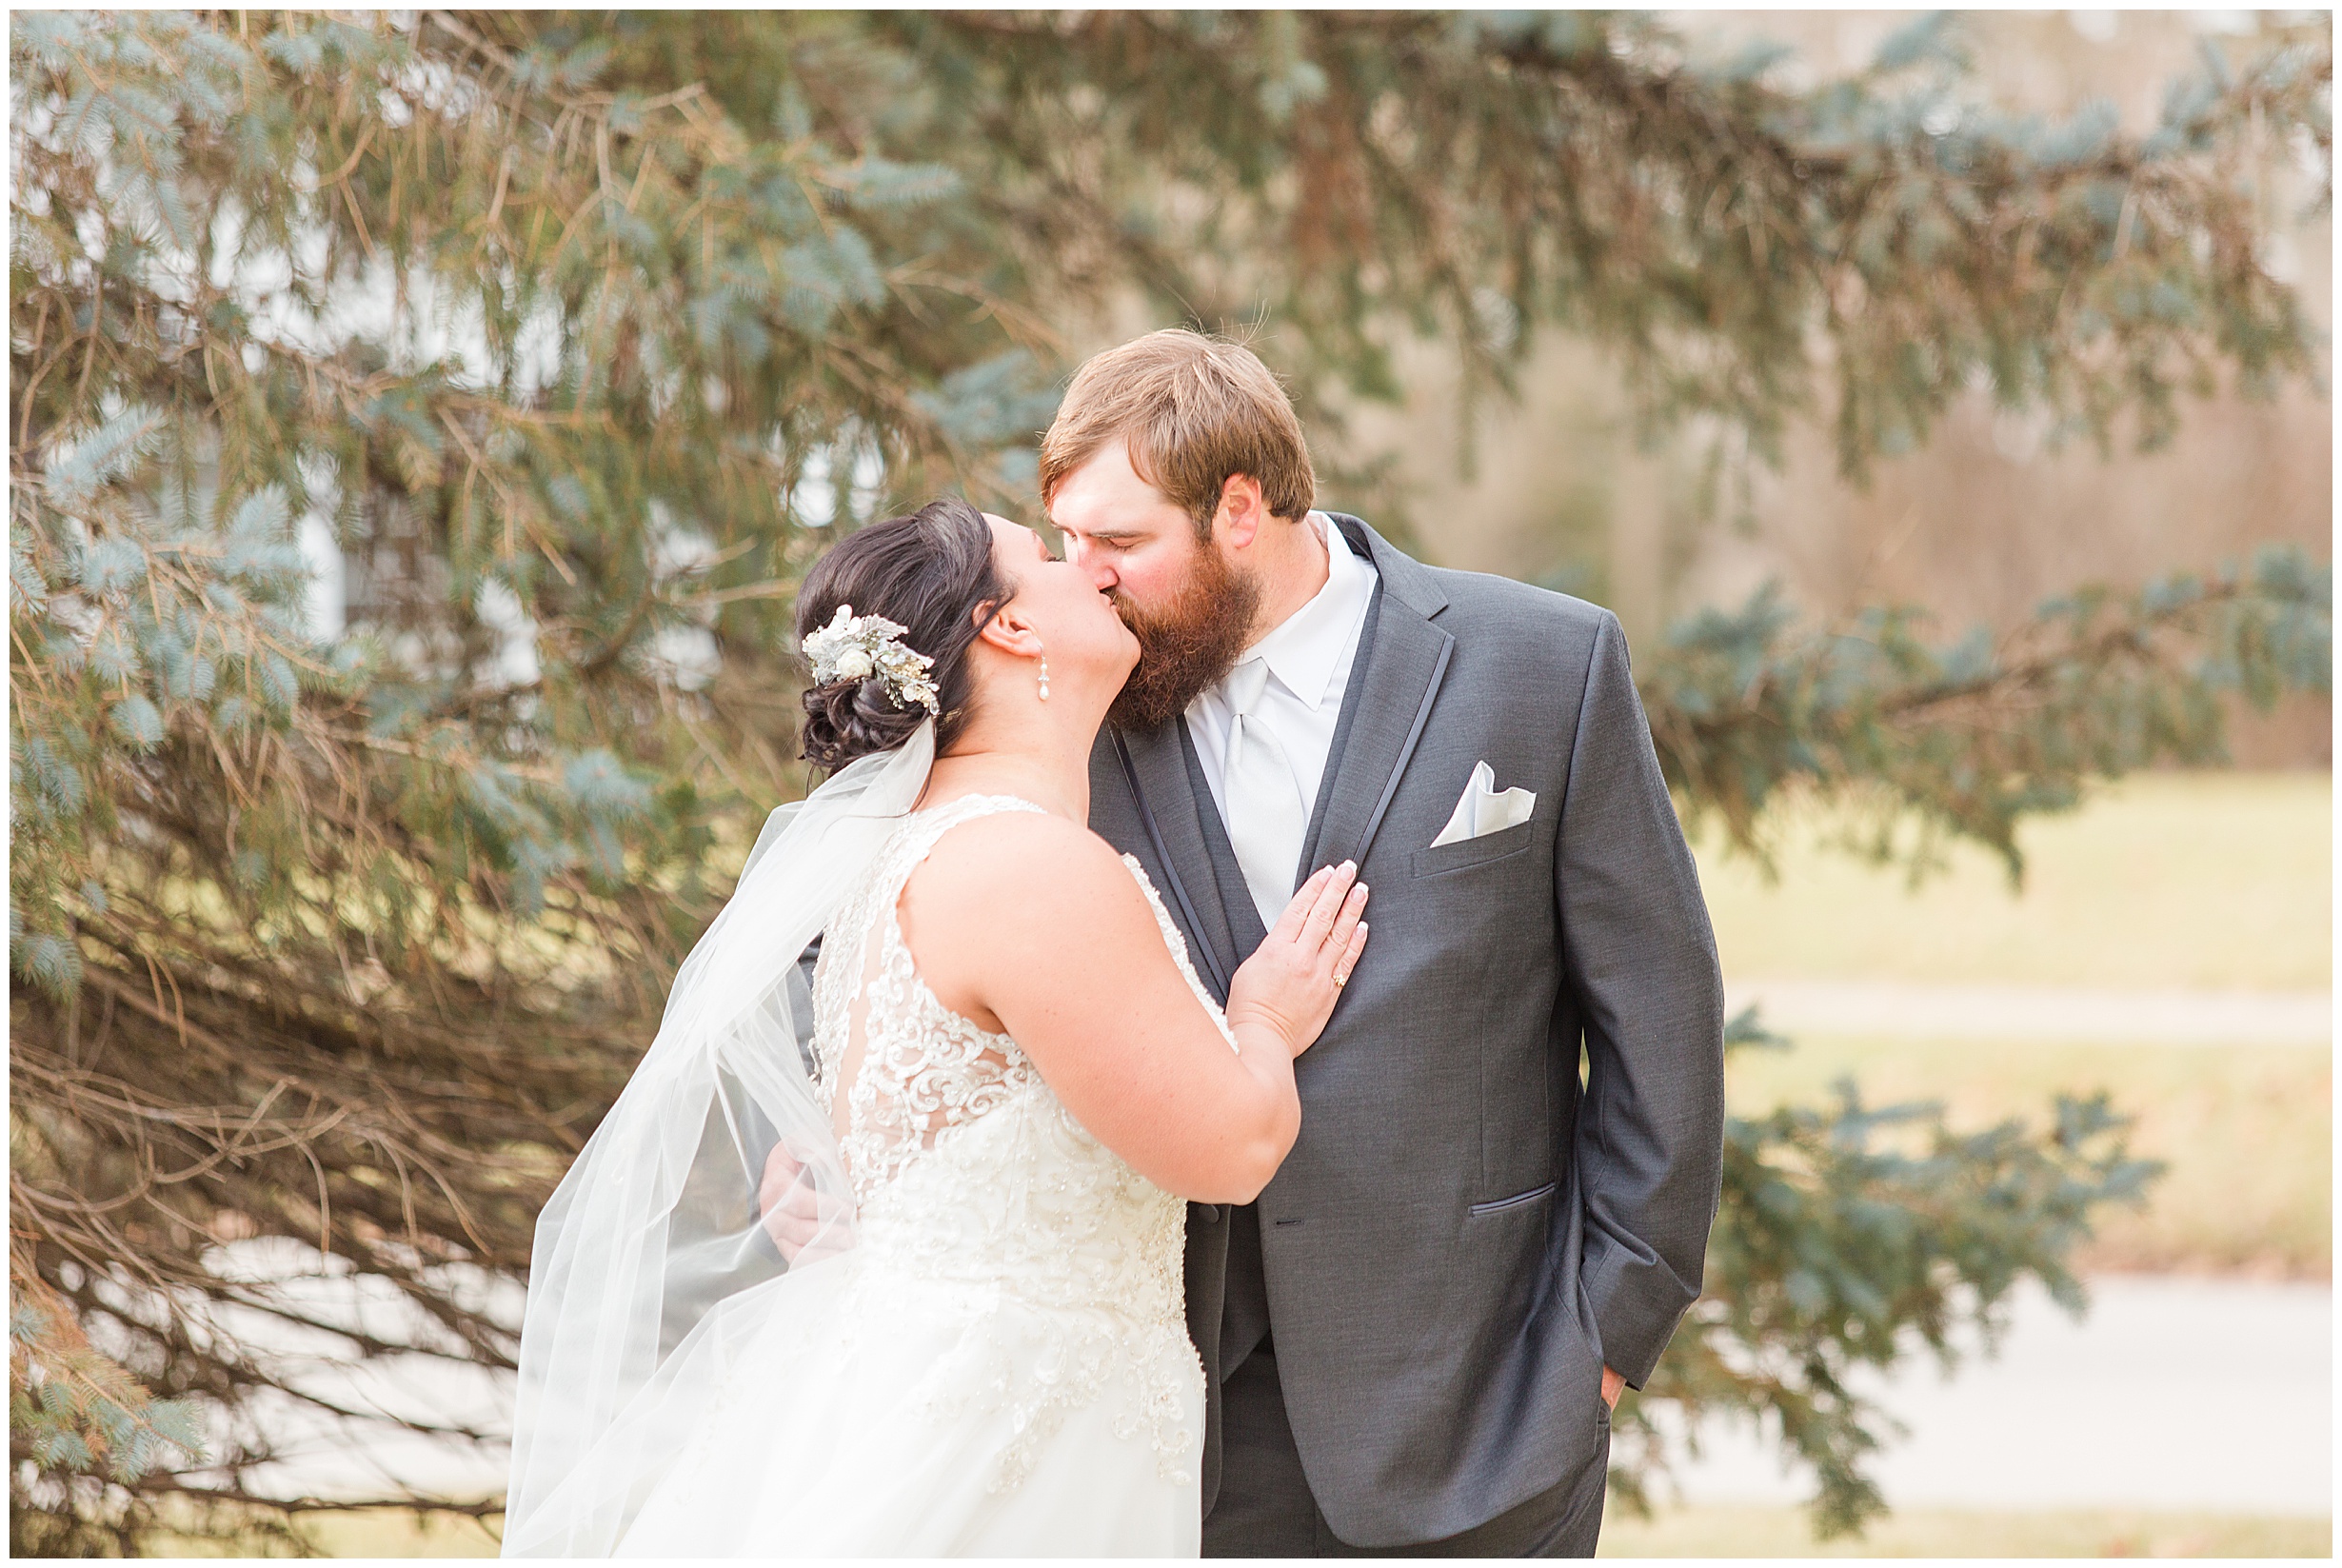 Iowa City Photographers - Decorah Wedding -Megan Snitker Photography_0128.jpg